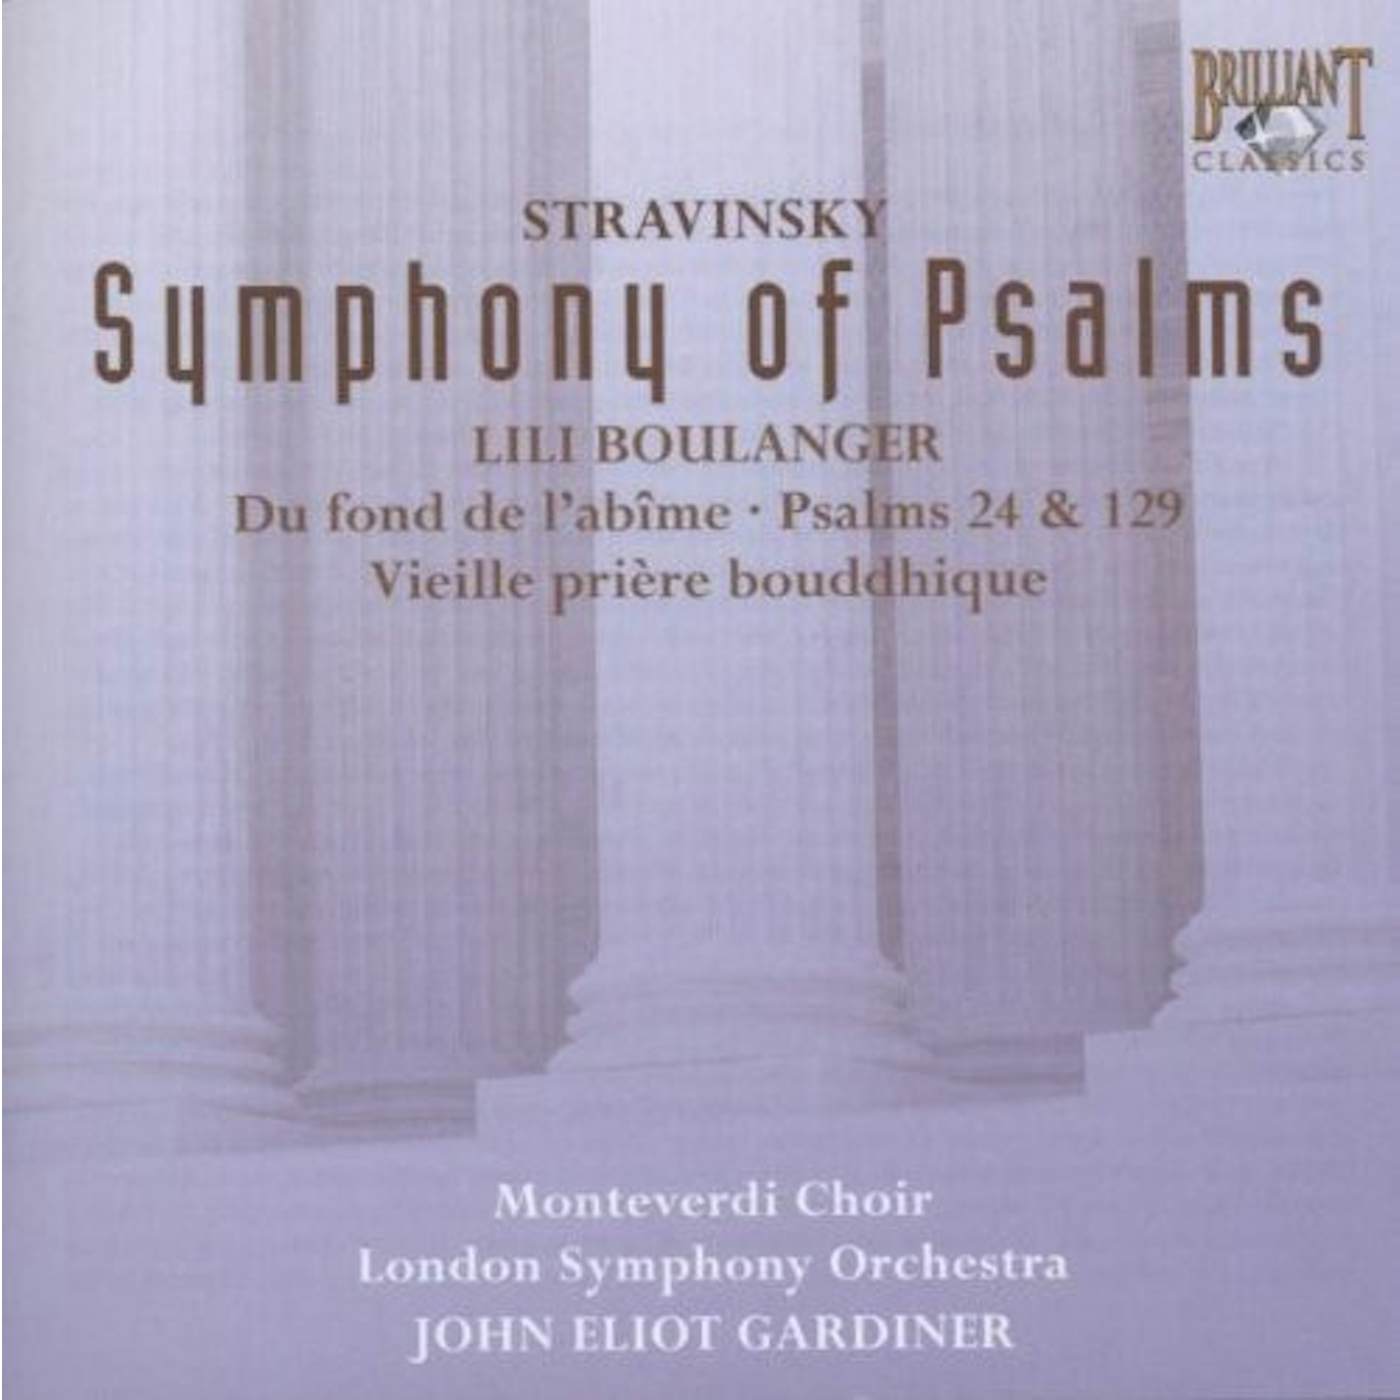 Igor Stravinsky SYMPHONIES DES PSAUMES CD